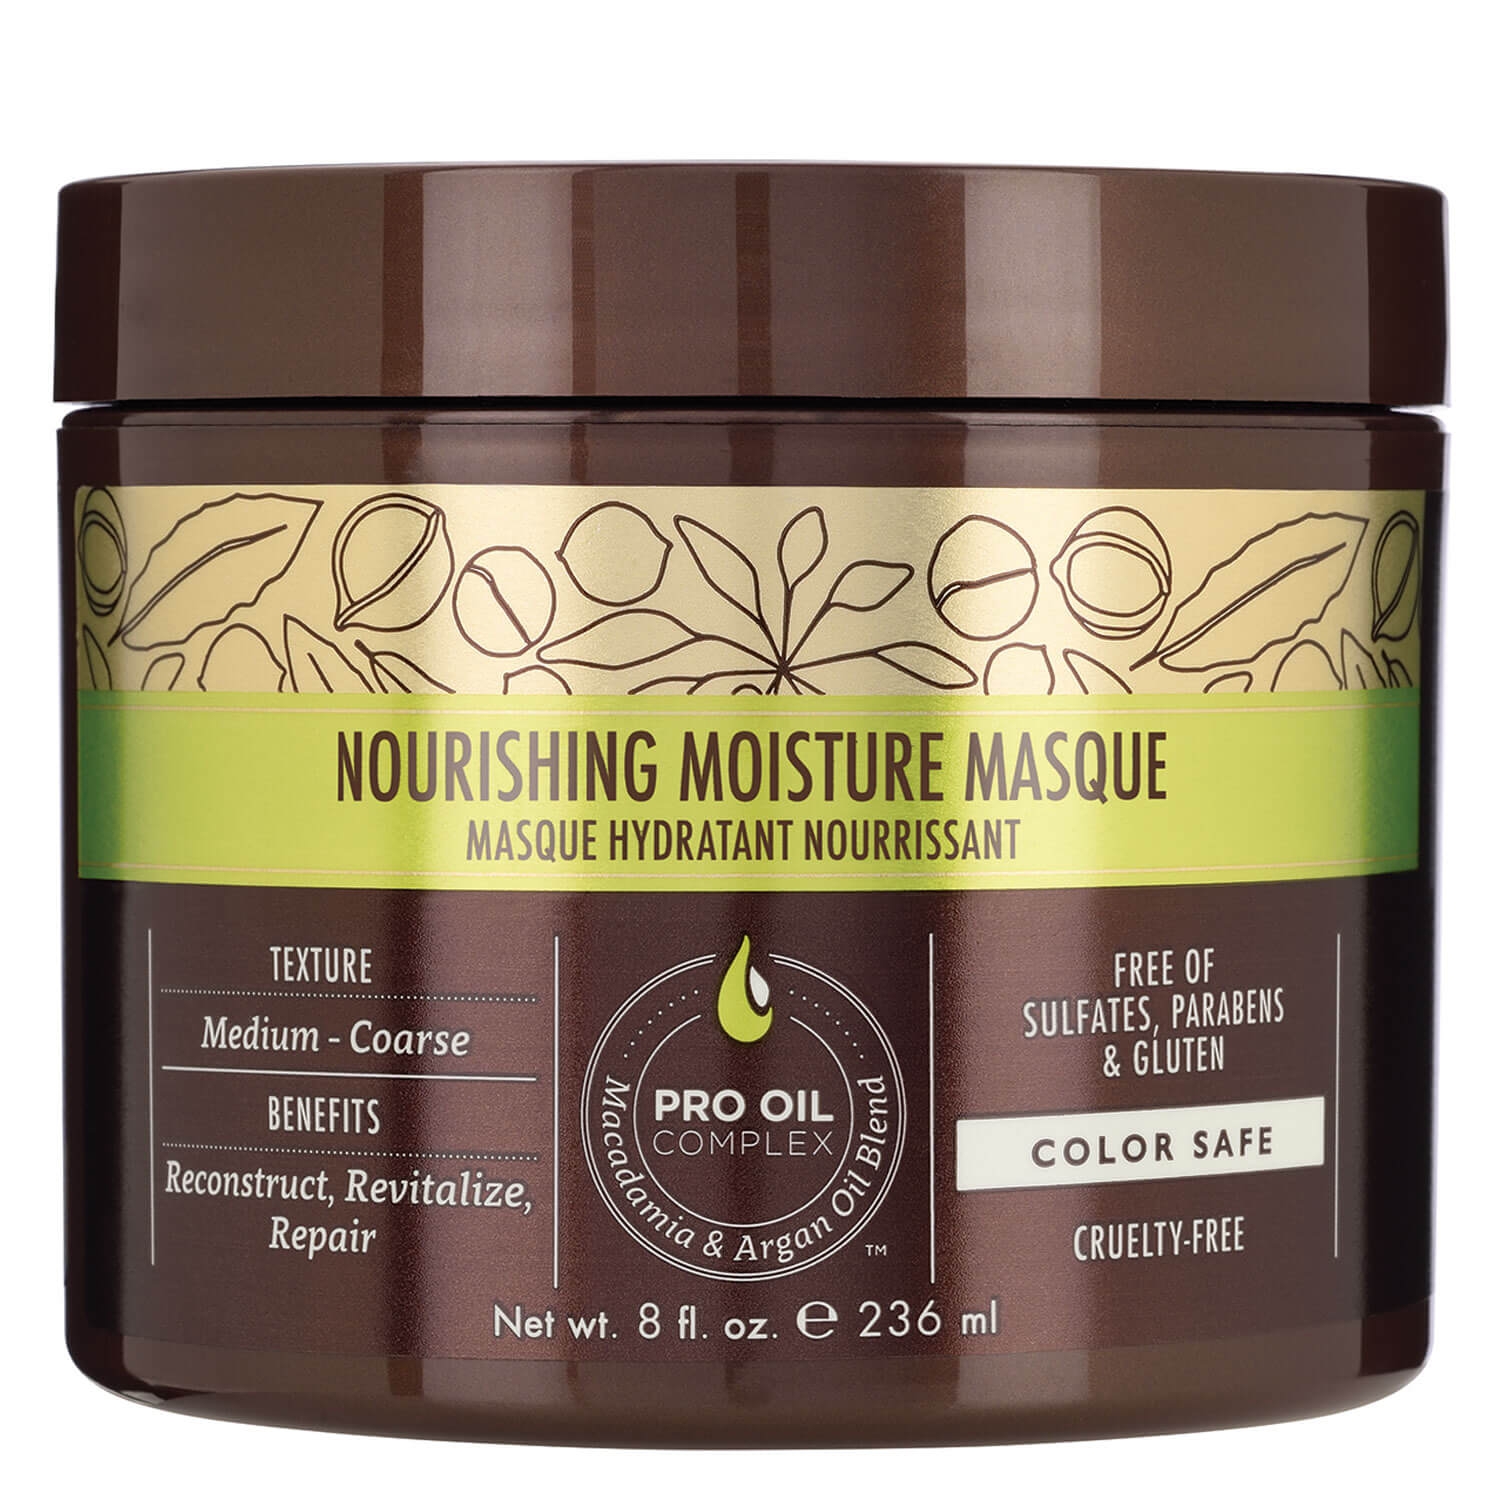 Product image from Macadamia - Nourishing Moisture Masque